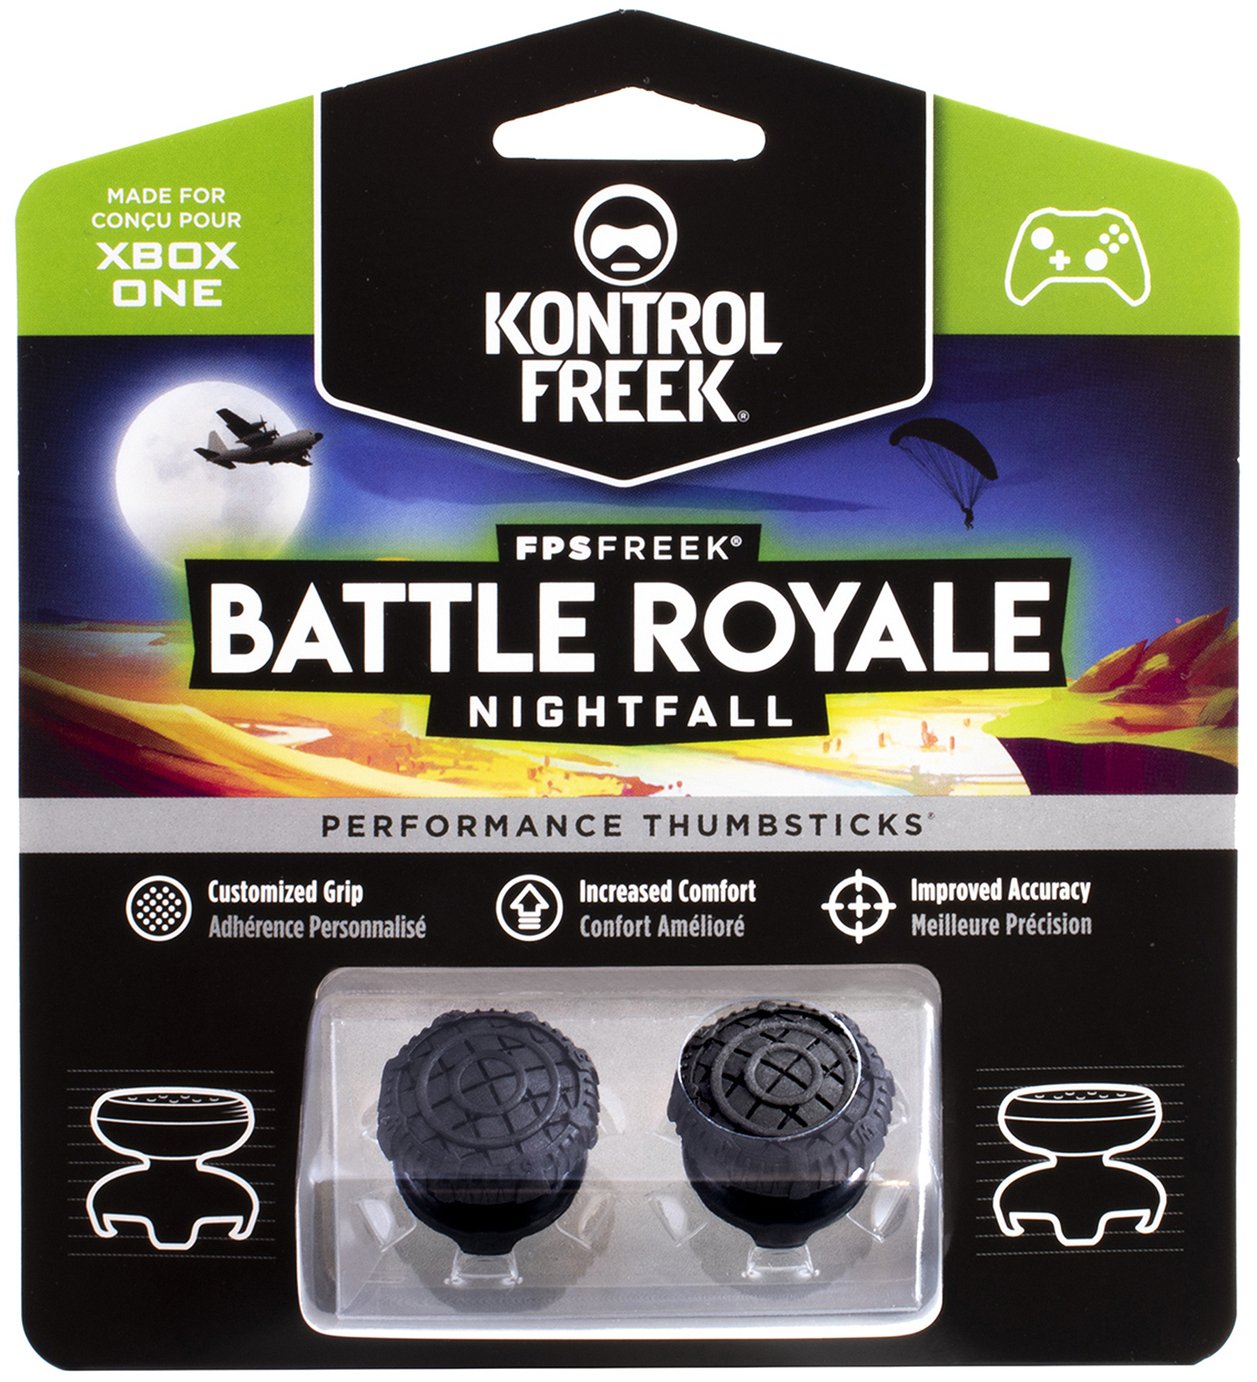 KontrolFreek Battle Royale: Nightfall Xbox One Thumbsticks